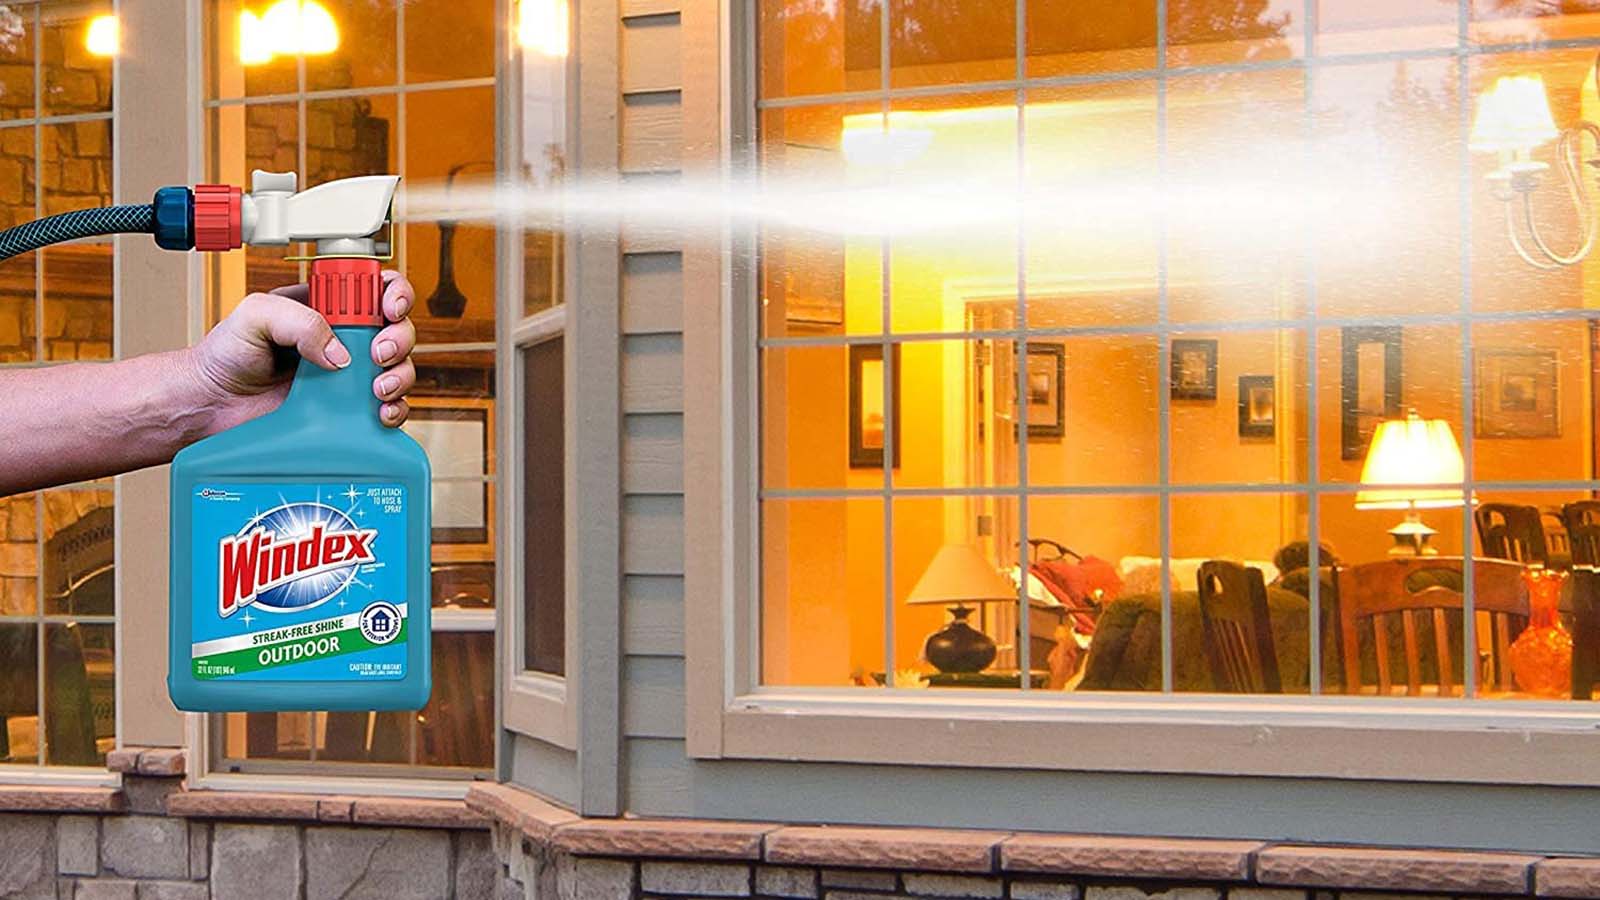 Outdoor Window Cleaner: The Best Way to Clean Windows